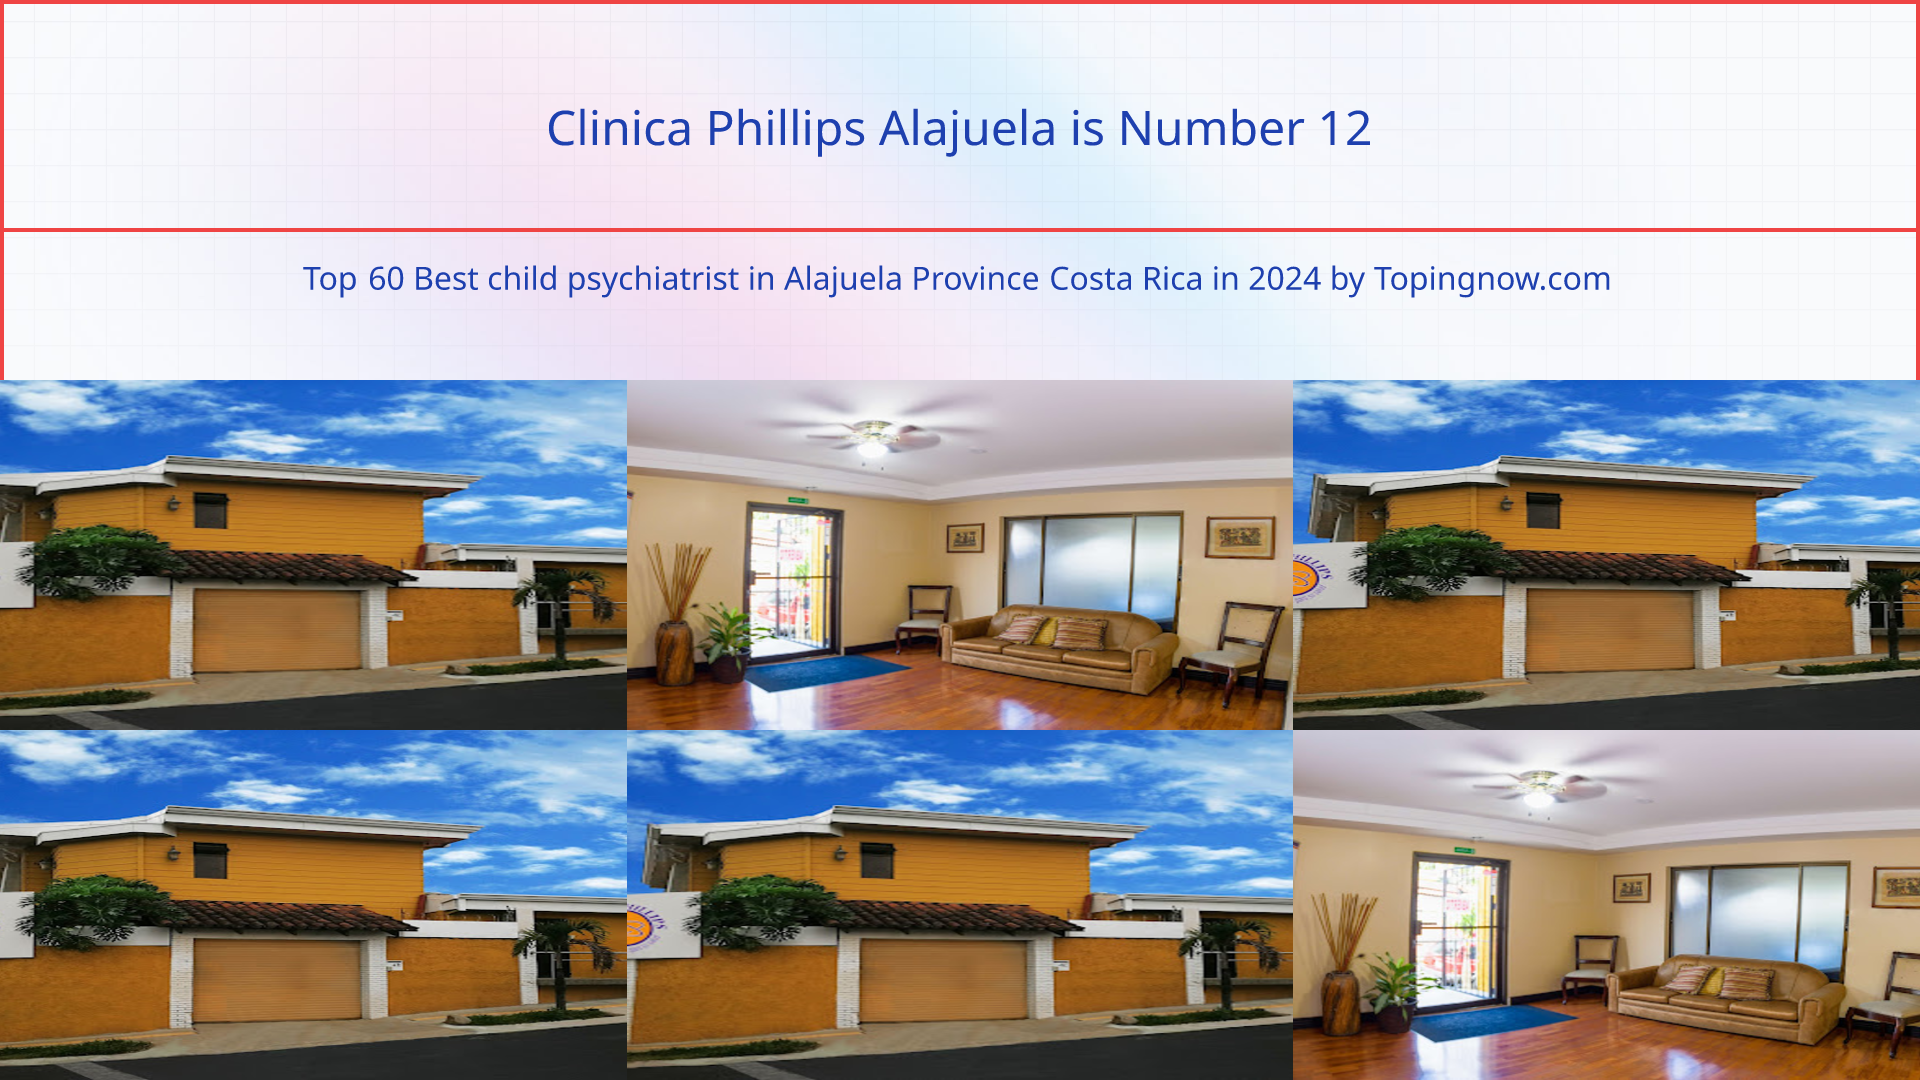 Clinica Phillips Alajuela: Top 60 Best child psychiatrist in Alajuela Province Costa Rica in 2024